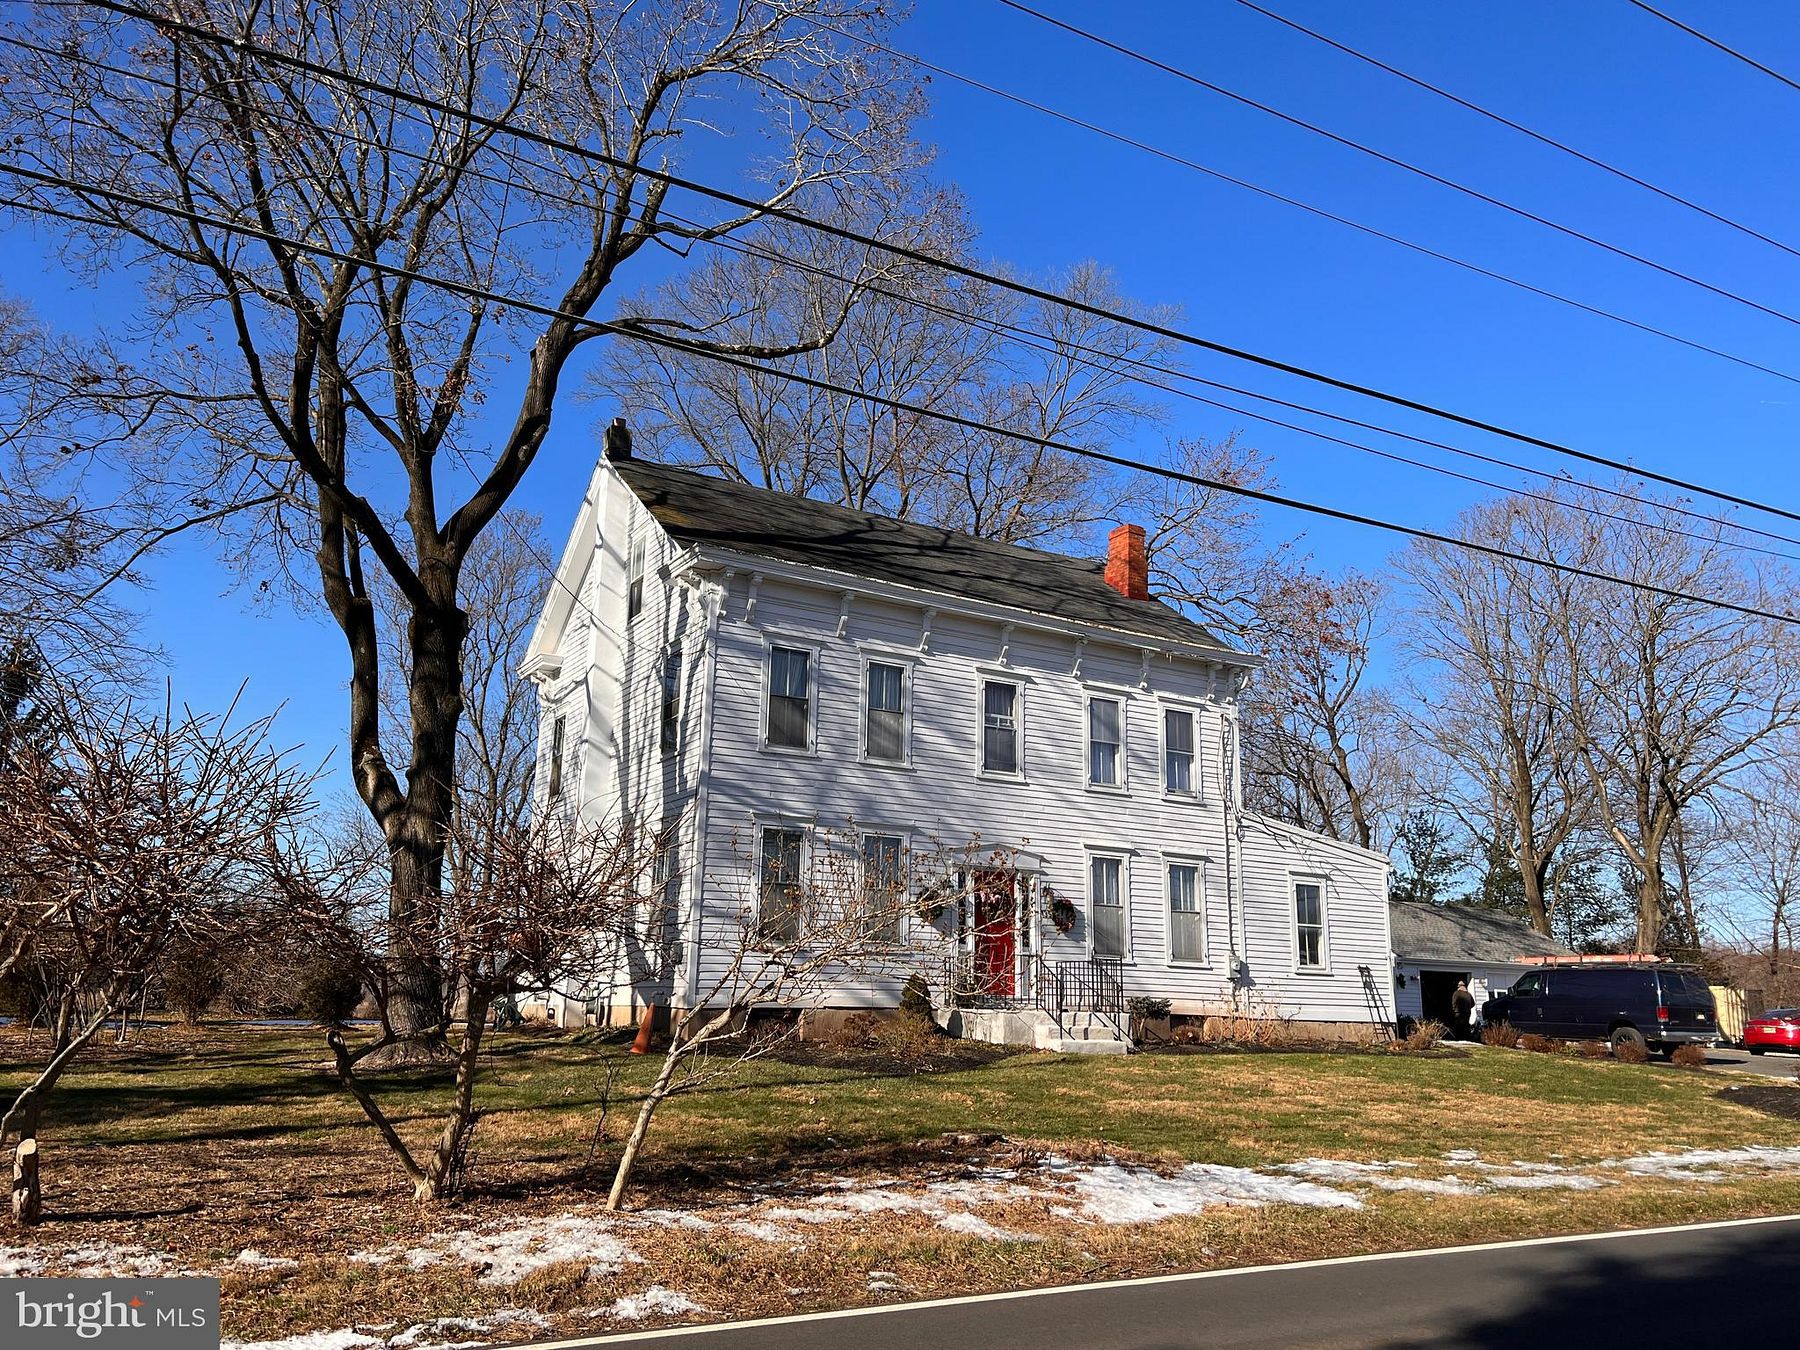 50.9 Acres of Land & Home Pennington, New Jersey, NJ